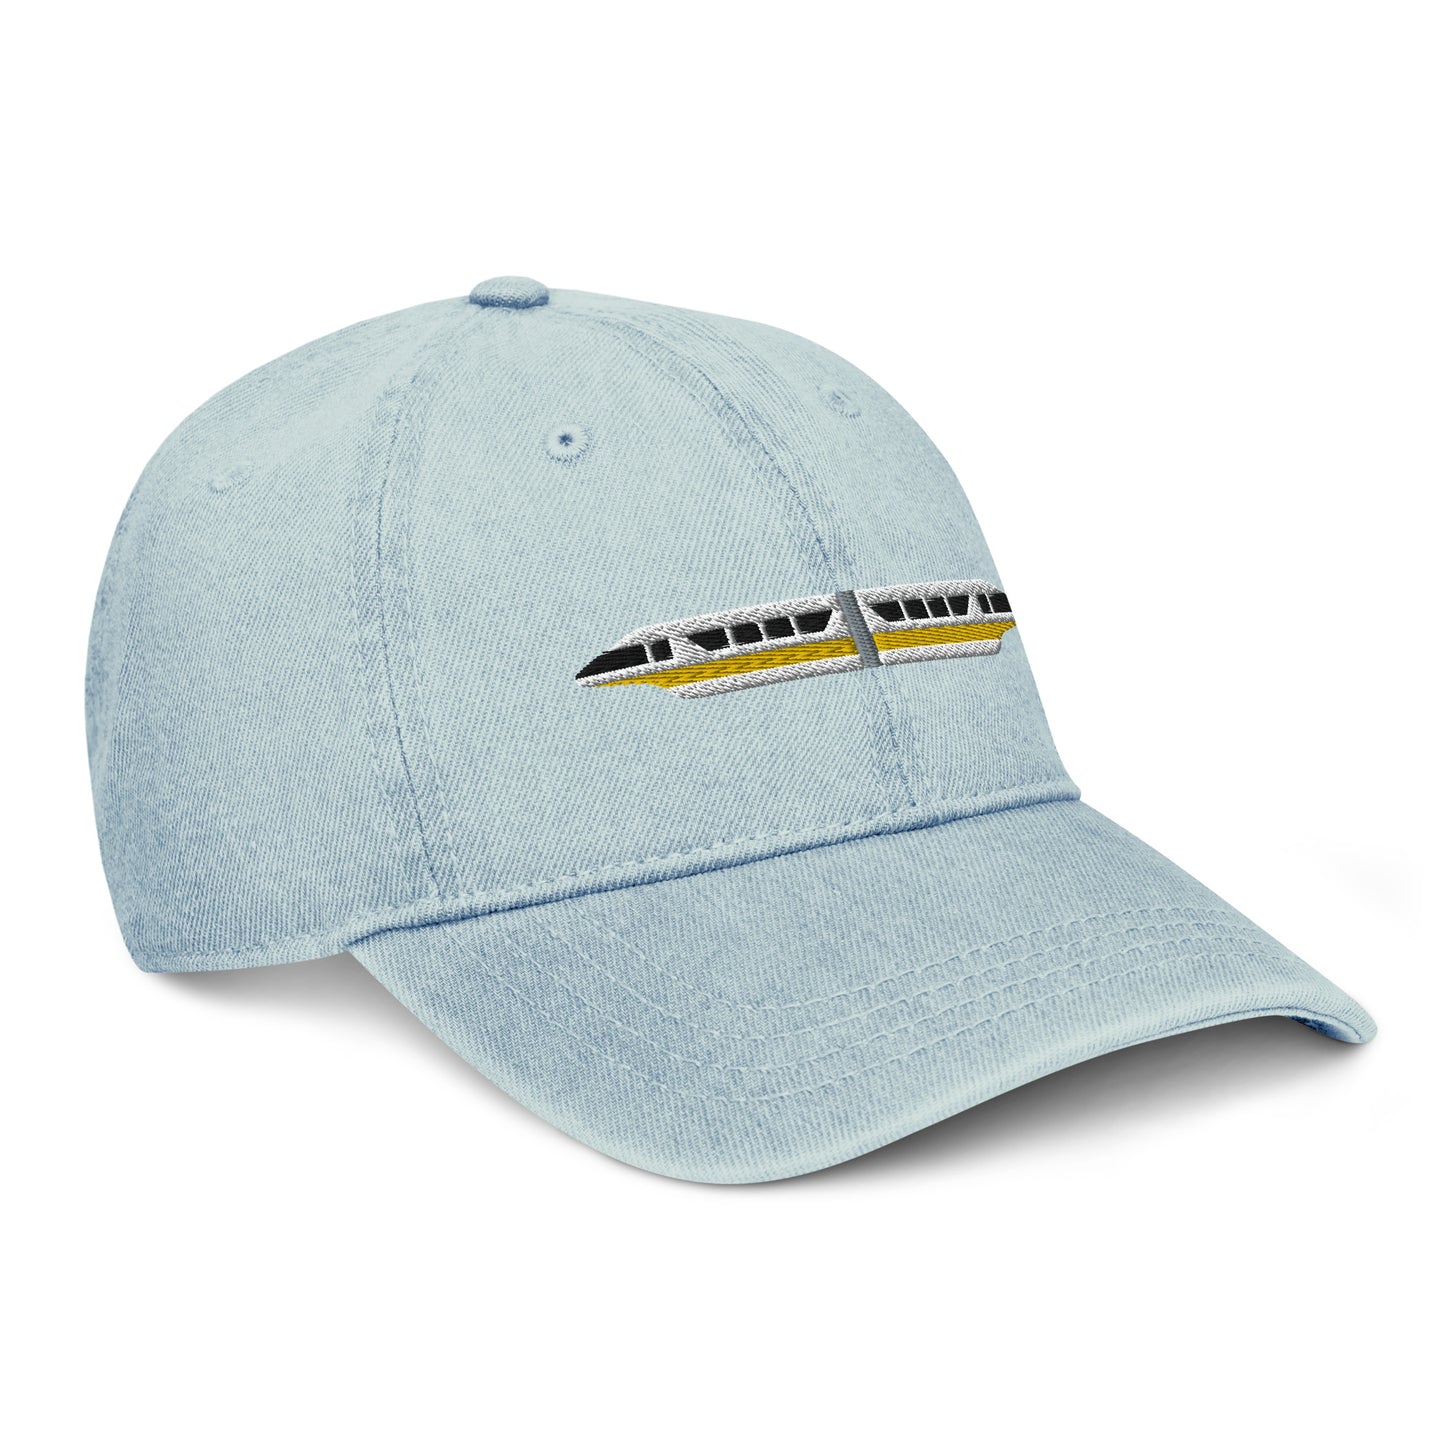 Monorail Yellow Denim Hat - CraftNOLA Cap - Light Blue Denim, Blue Denim, Black Denim